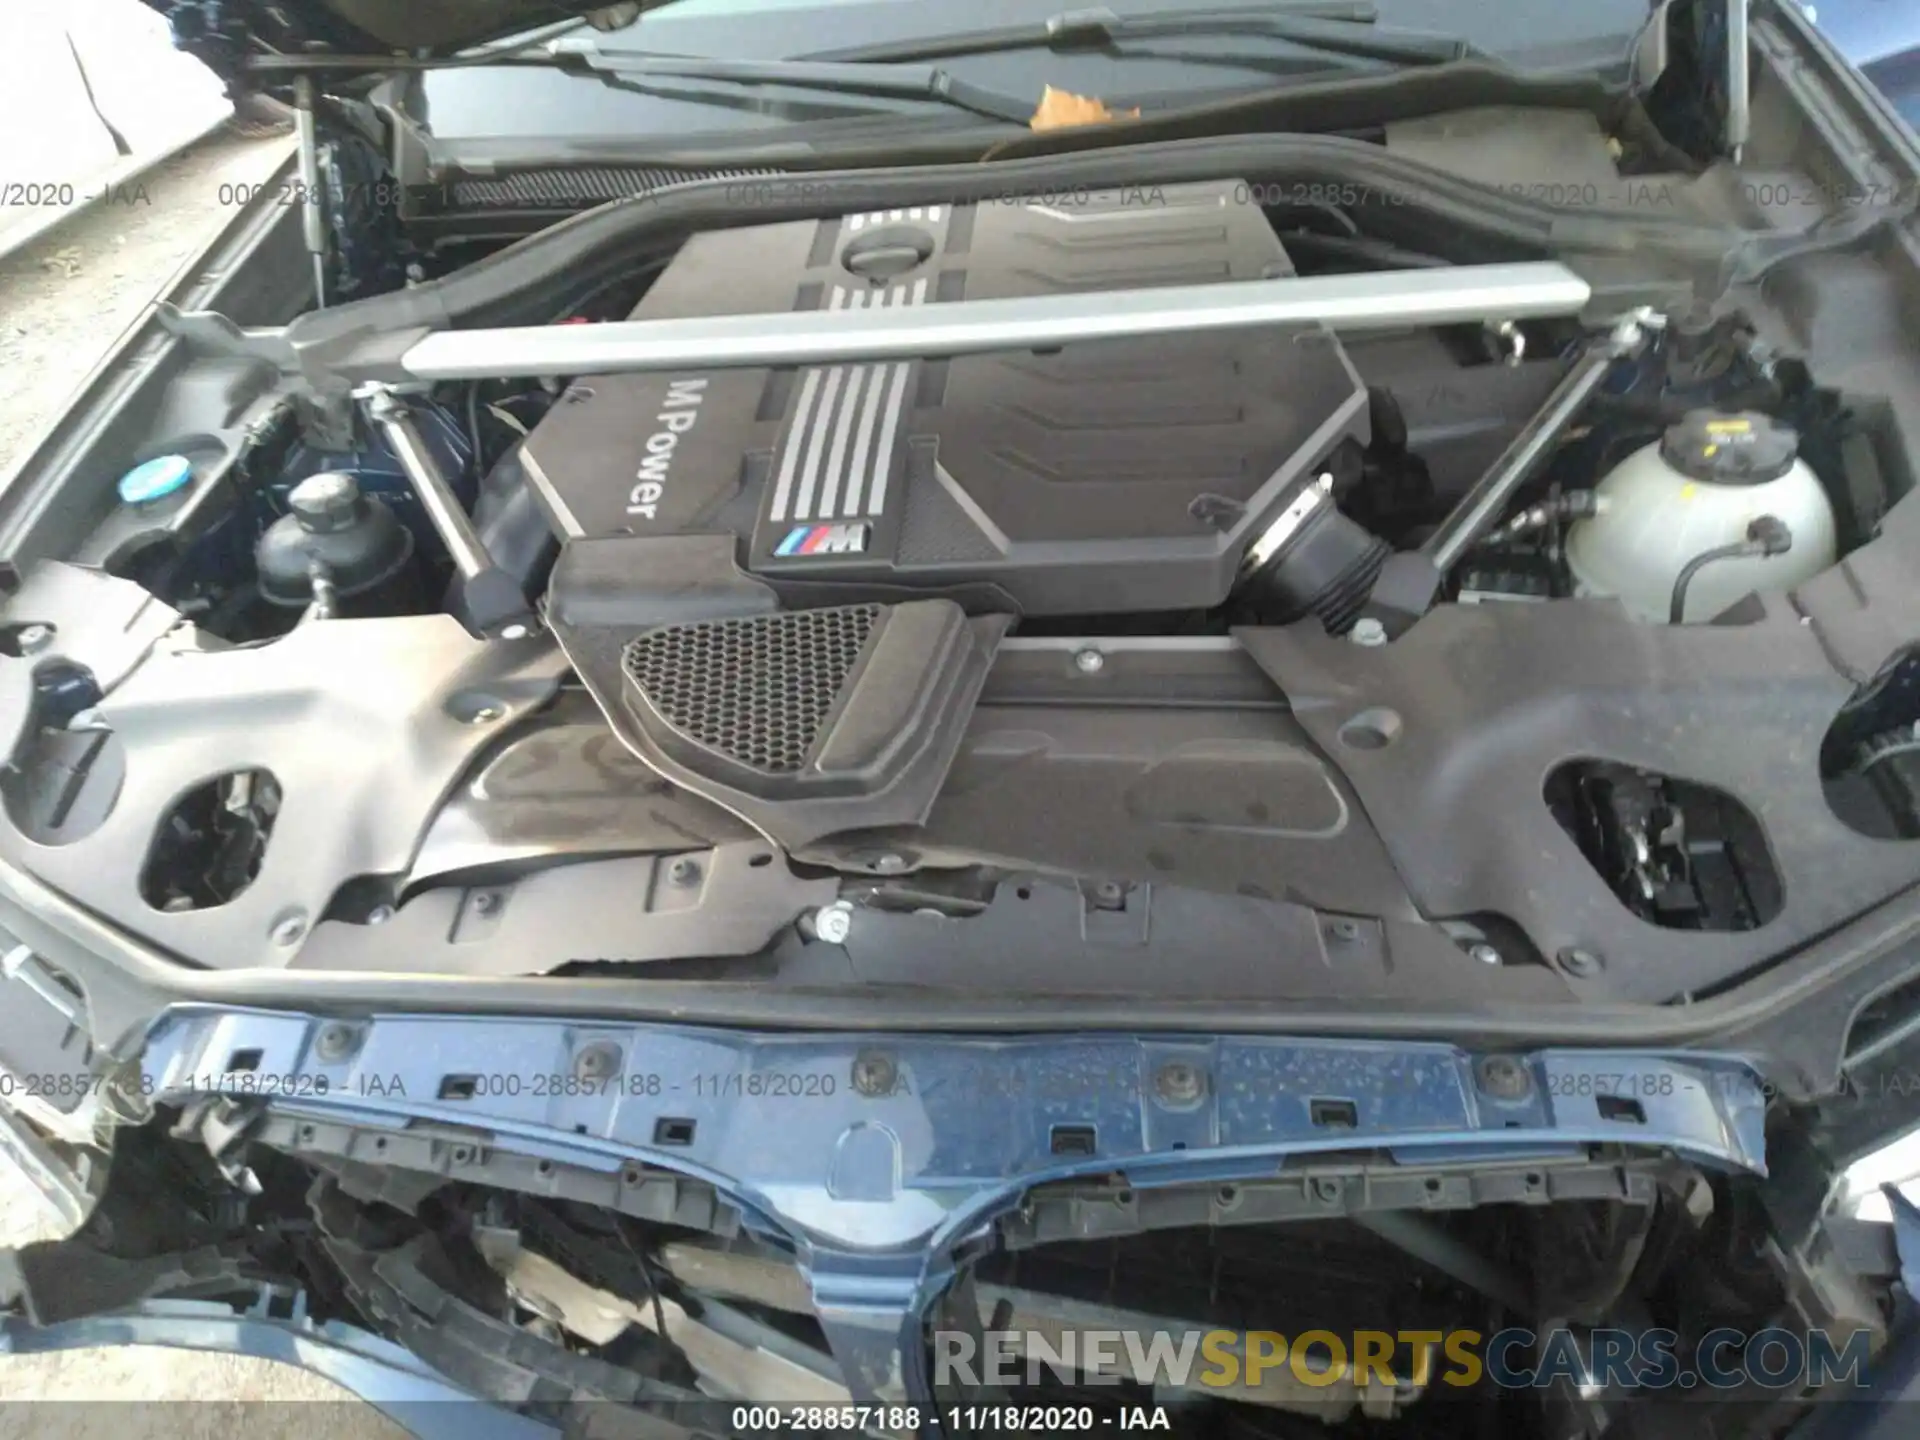 10 Photograph of a damaged car 5YMTS0C09L9B70144 BMW X3 M 2020